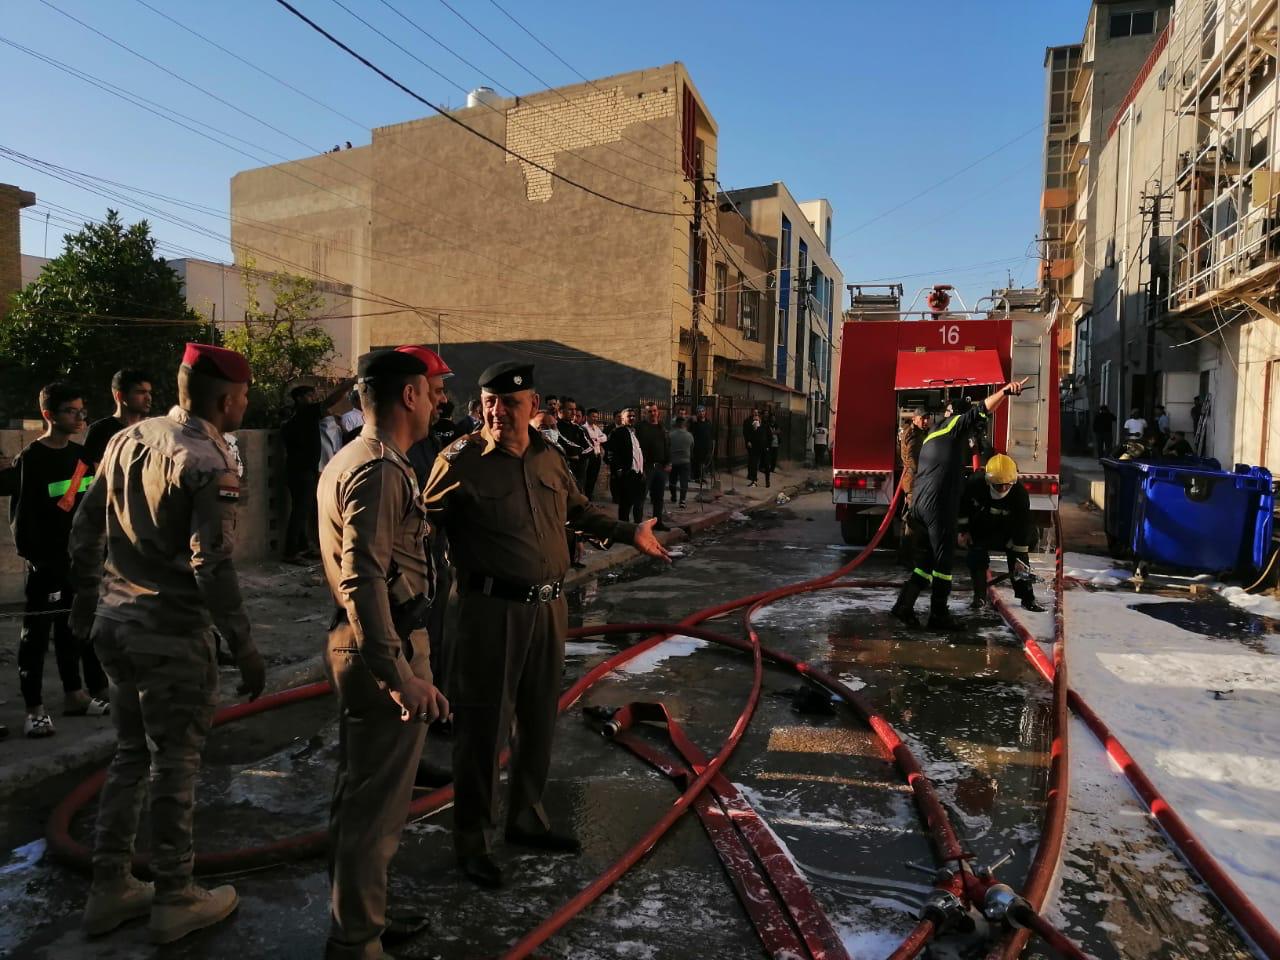 احتواء حريق بمطعم ببغداد عبر 7 فرق اطفاء